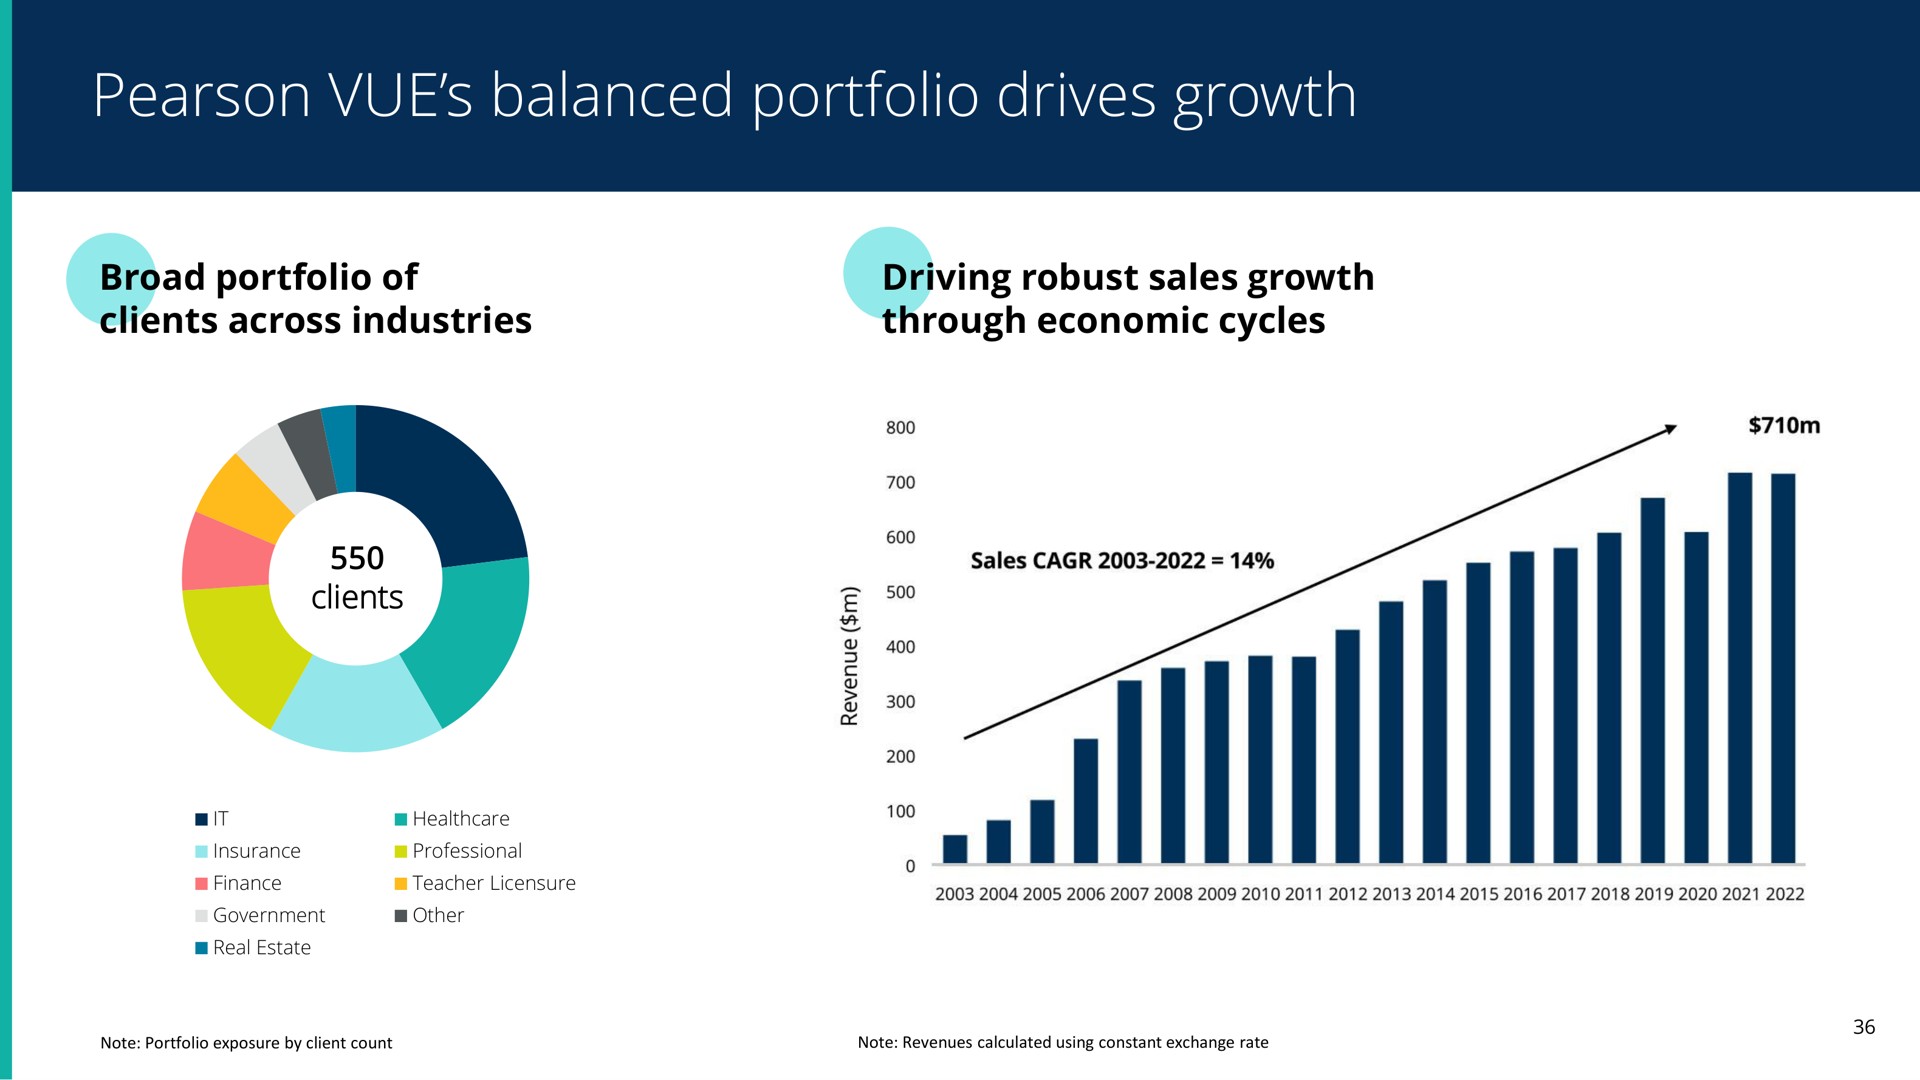 balanced portfolio drives growth | Pearson